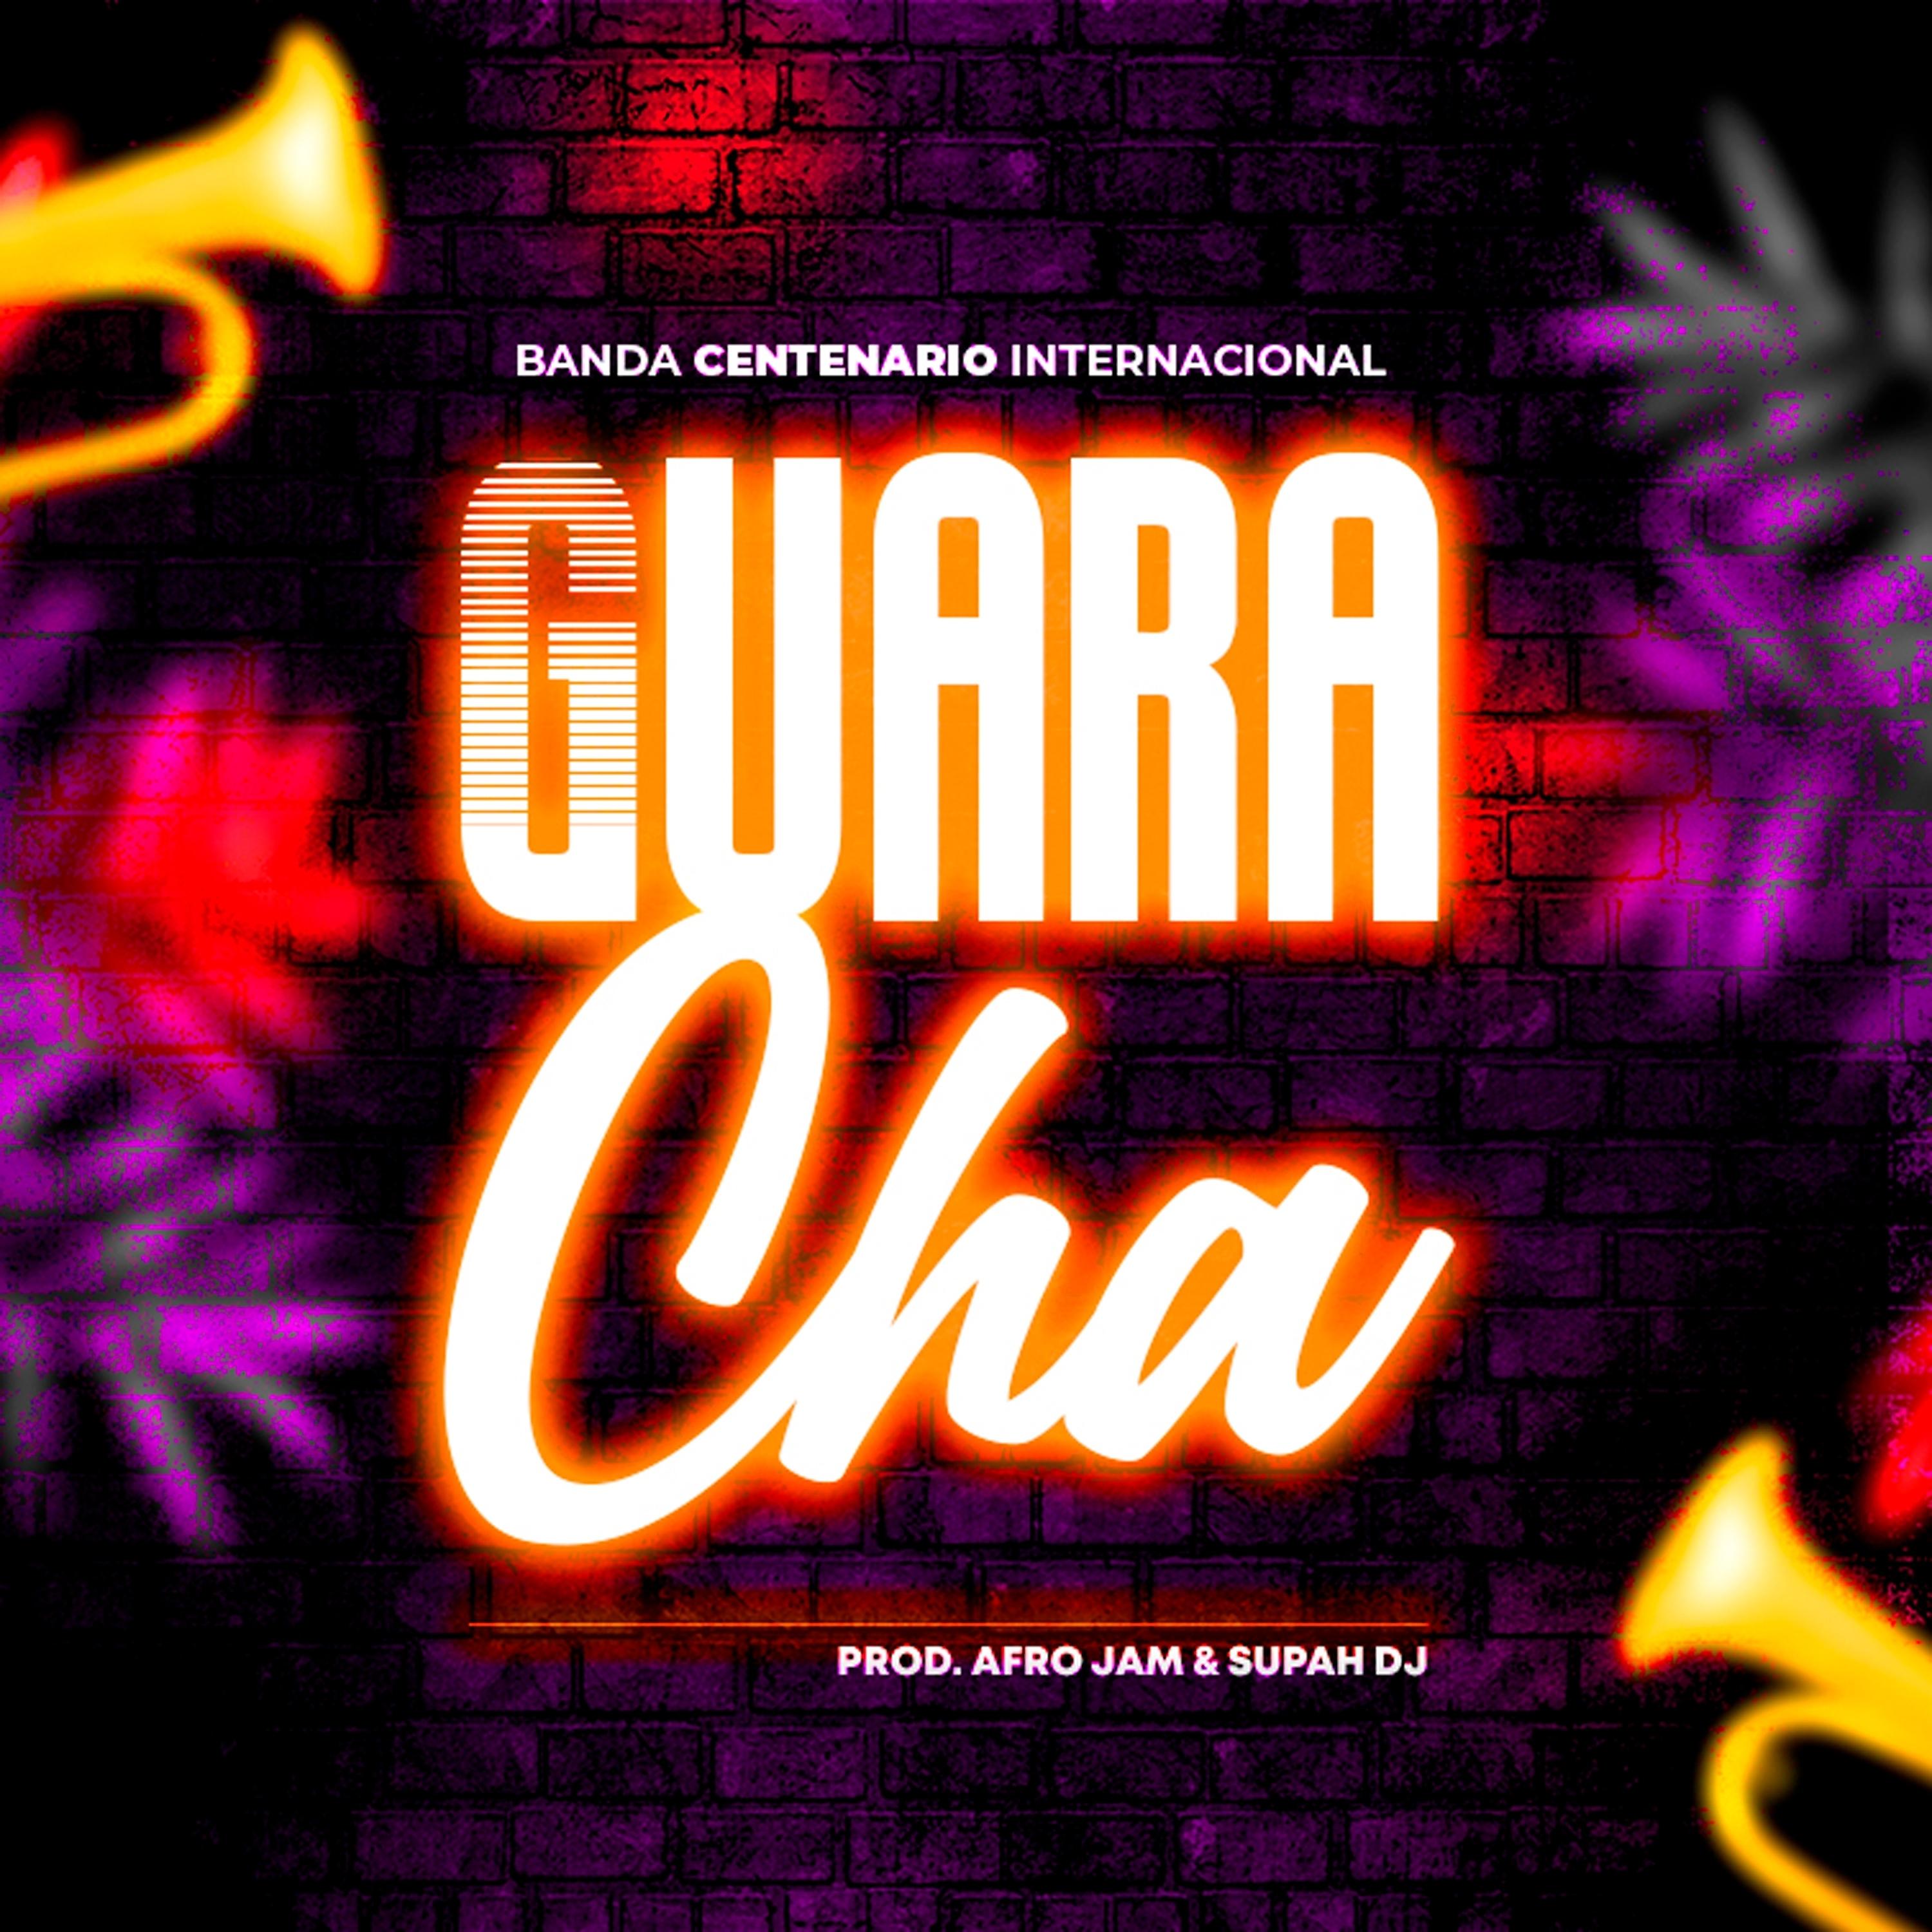 Постер альбома Guaracha